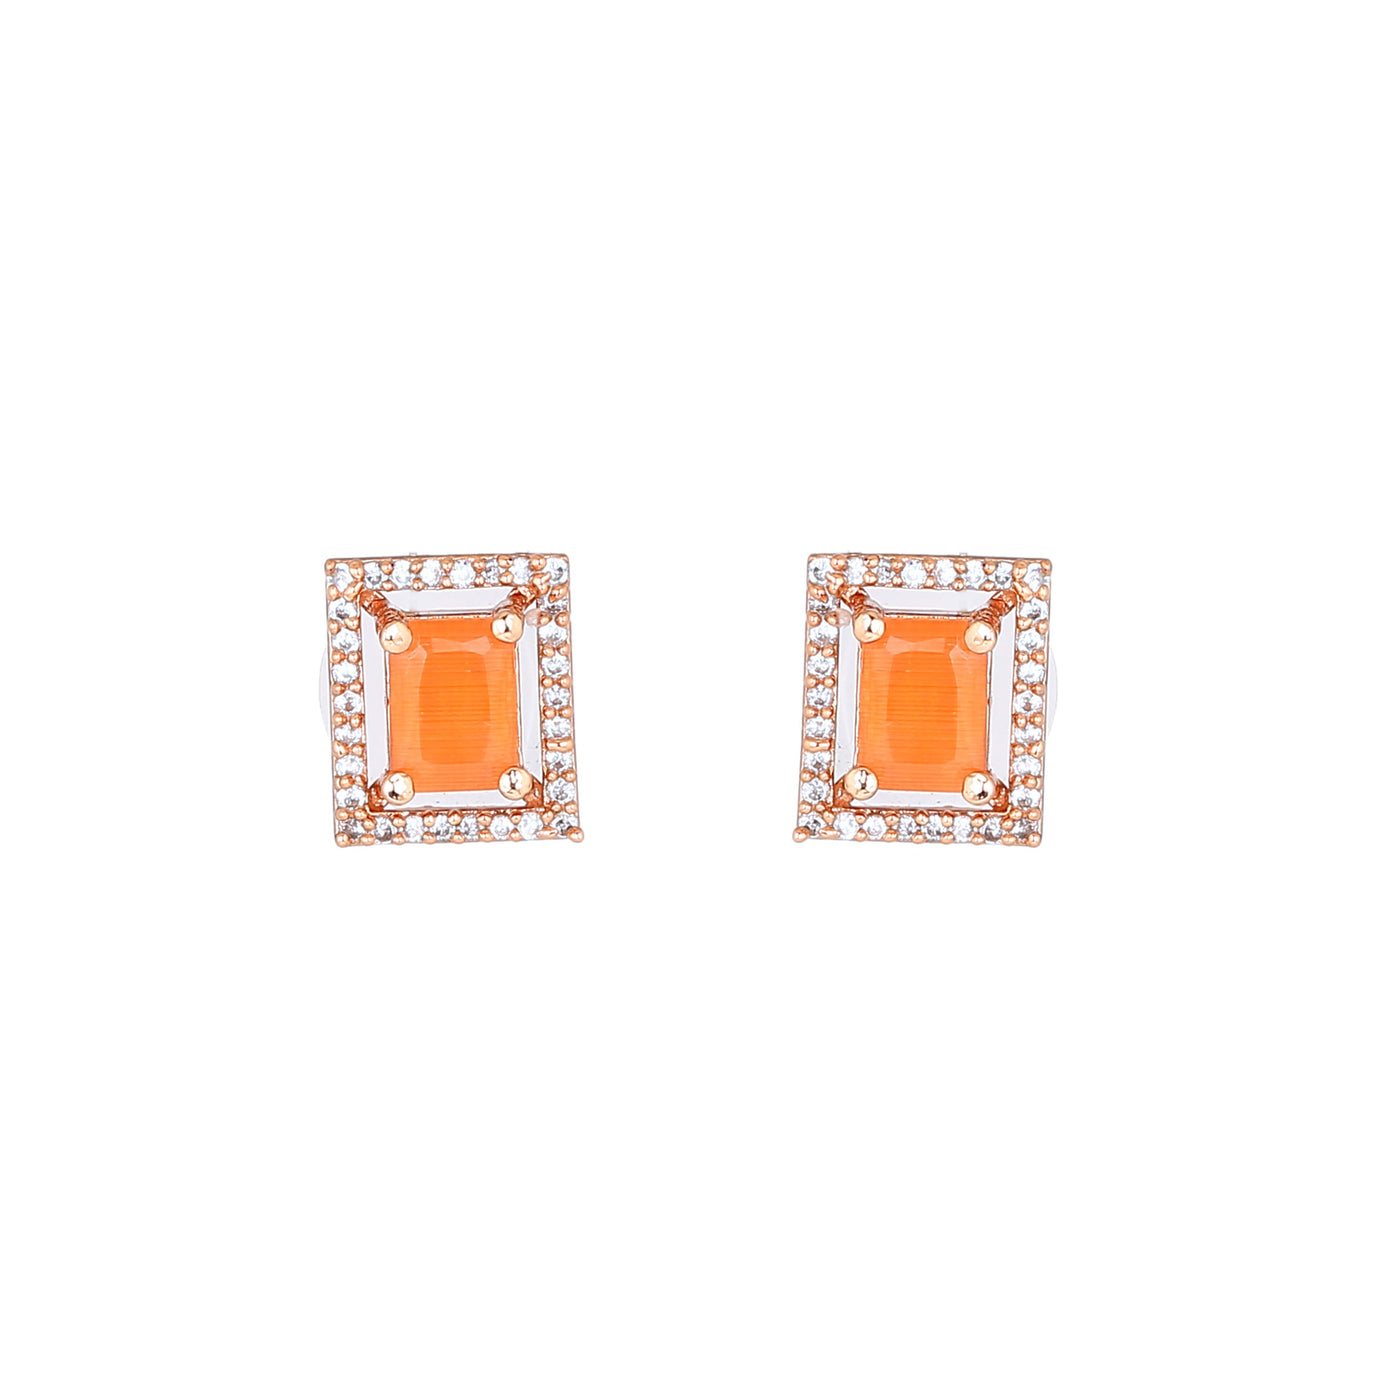 Estele Rose Gold Plated CZ Sparkling Pendant Set with Mint Orange Crystals for Women